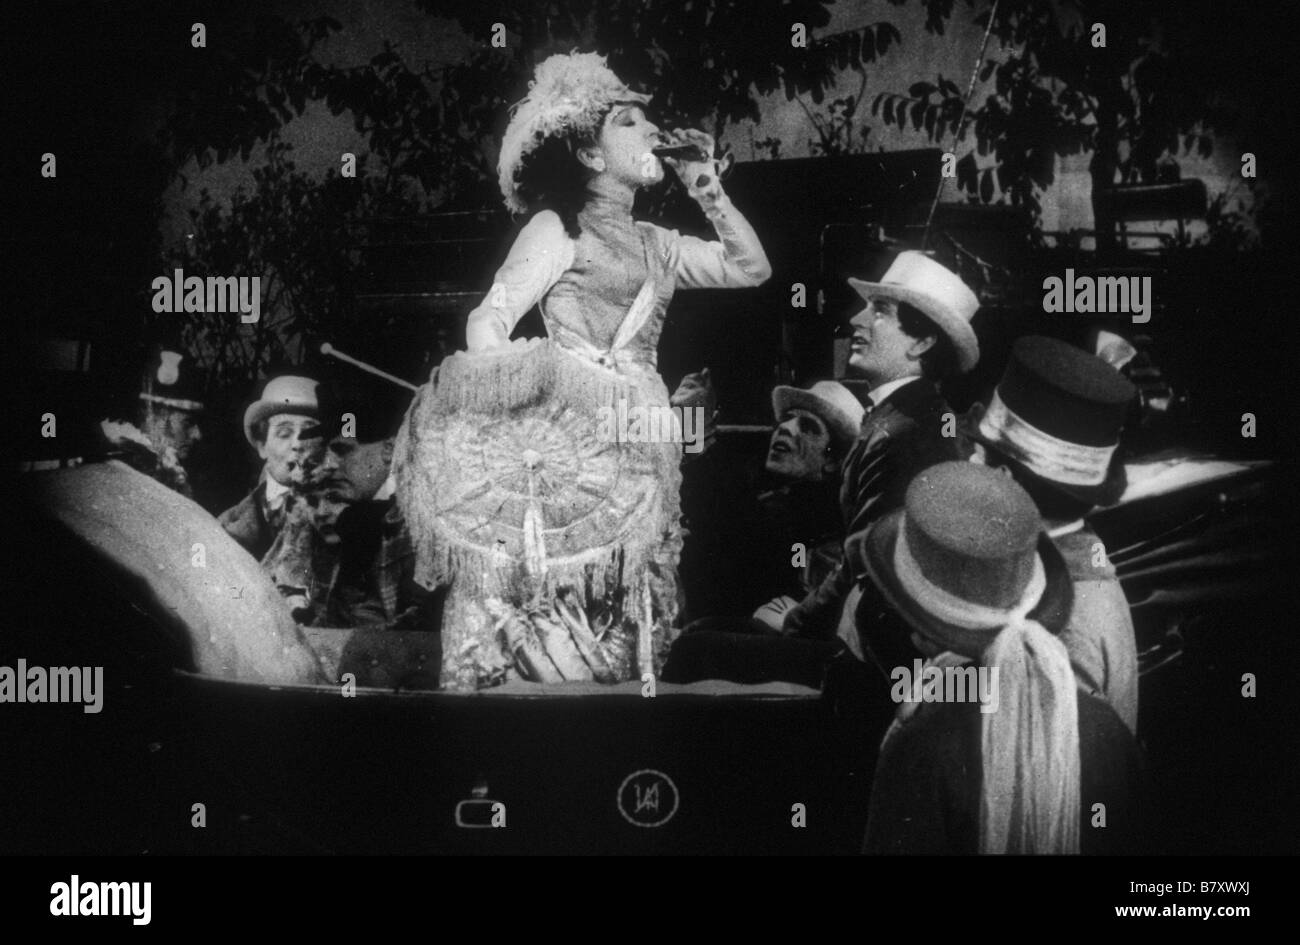 Nana Year: 1926 - France Catherine Hessling Director: Jean Renoir Stock Photo